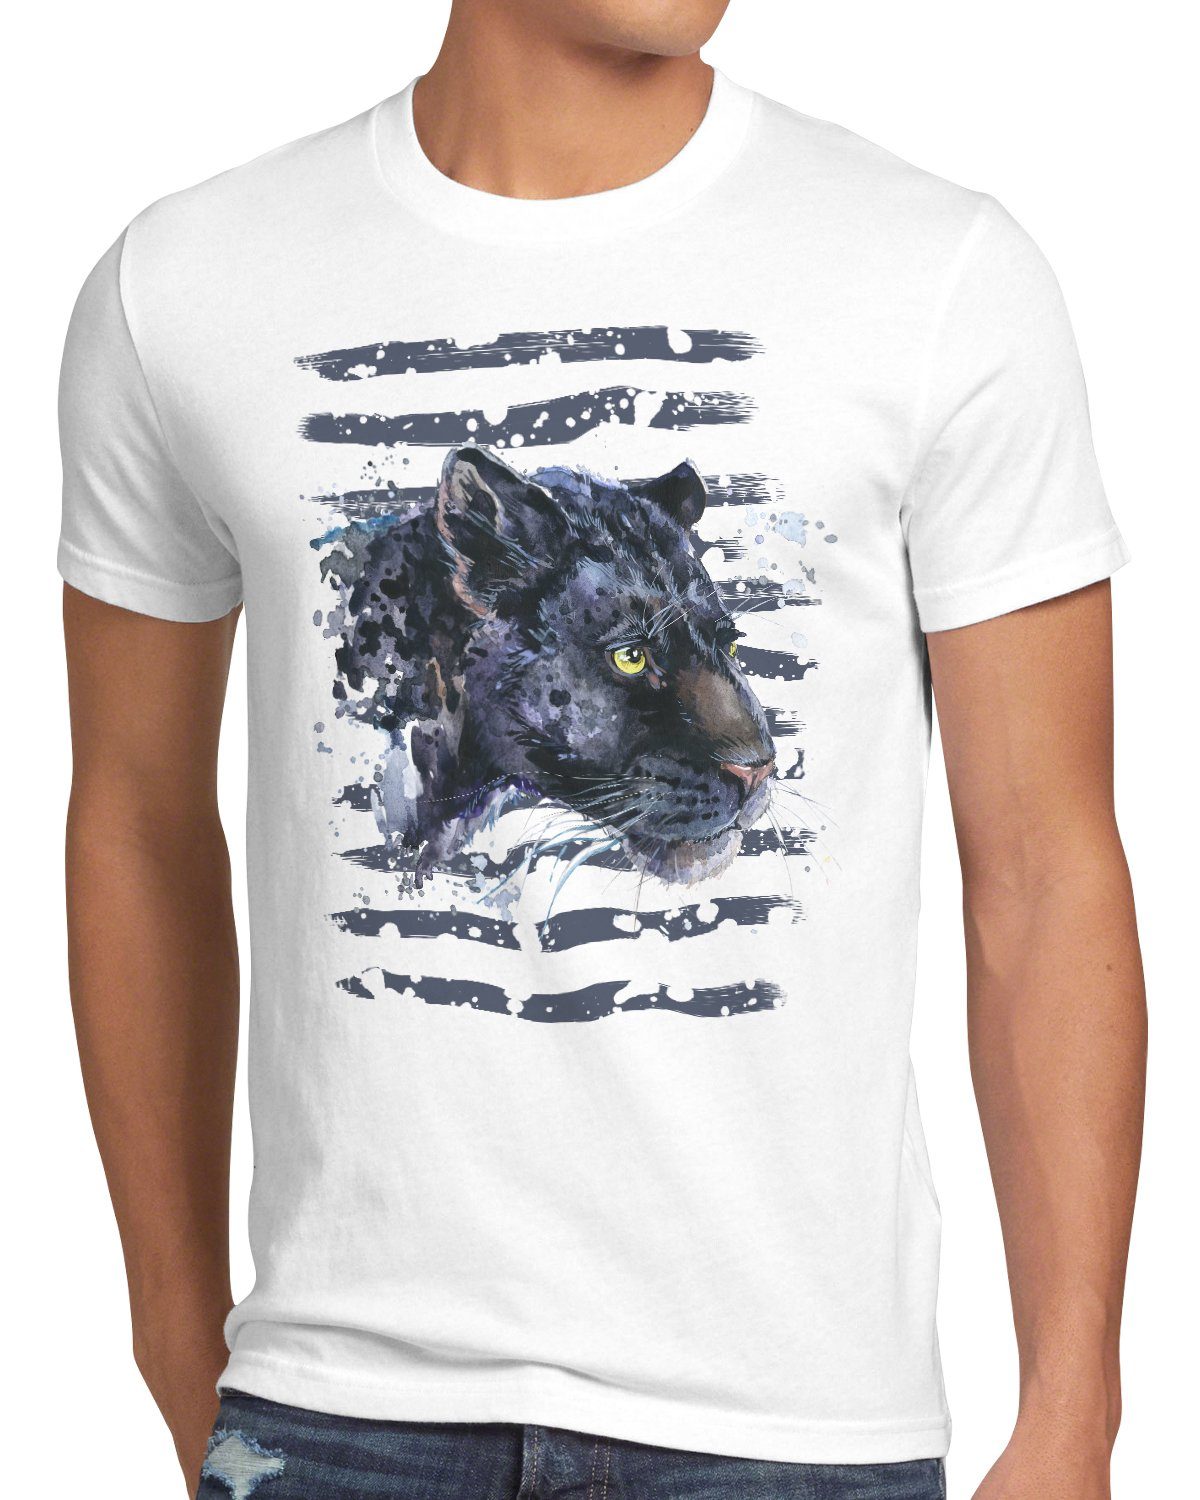 T-Shirt zoo berglöwe Print-Shirt style3 dschungel Herren Schwarzer Panther